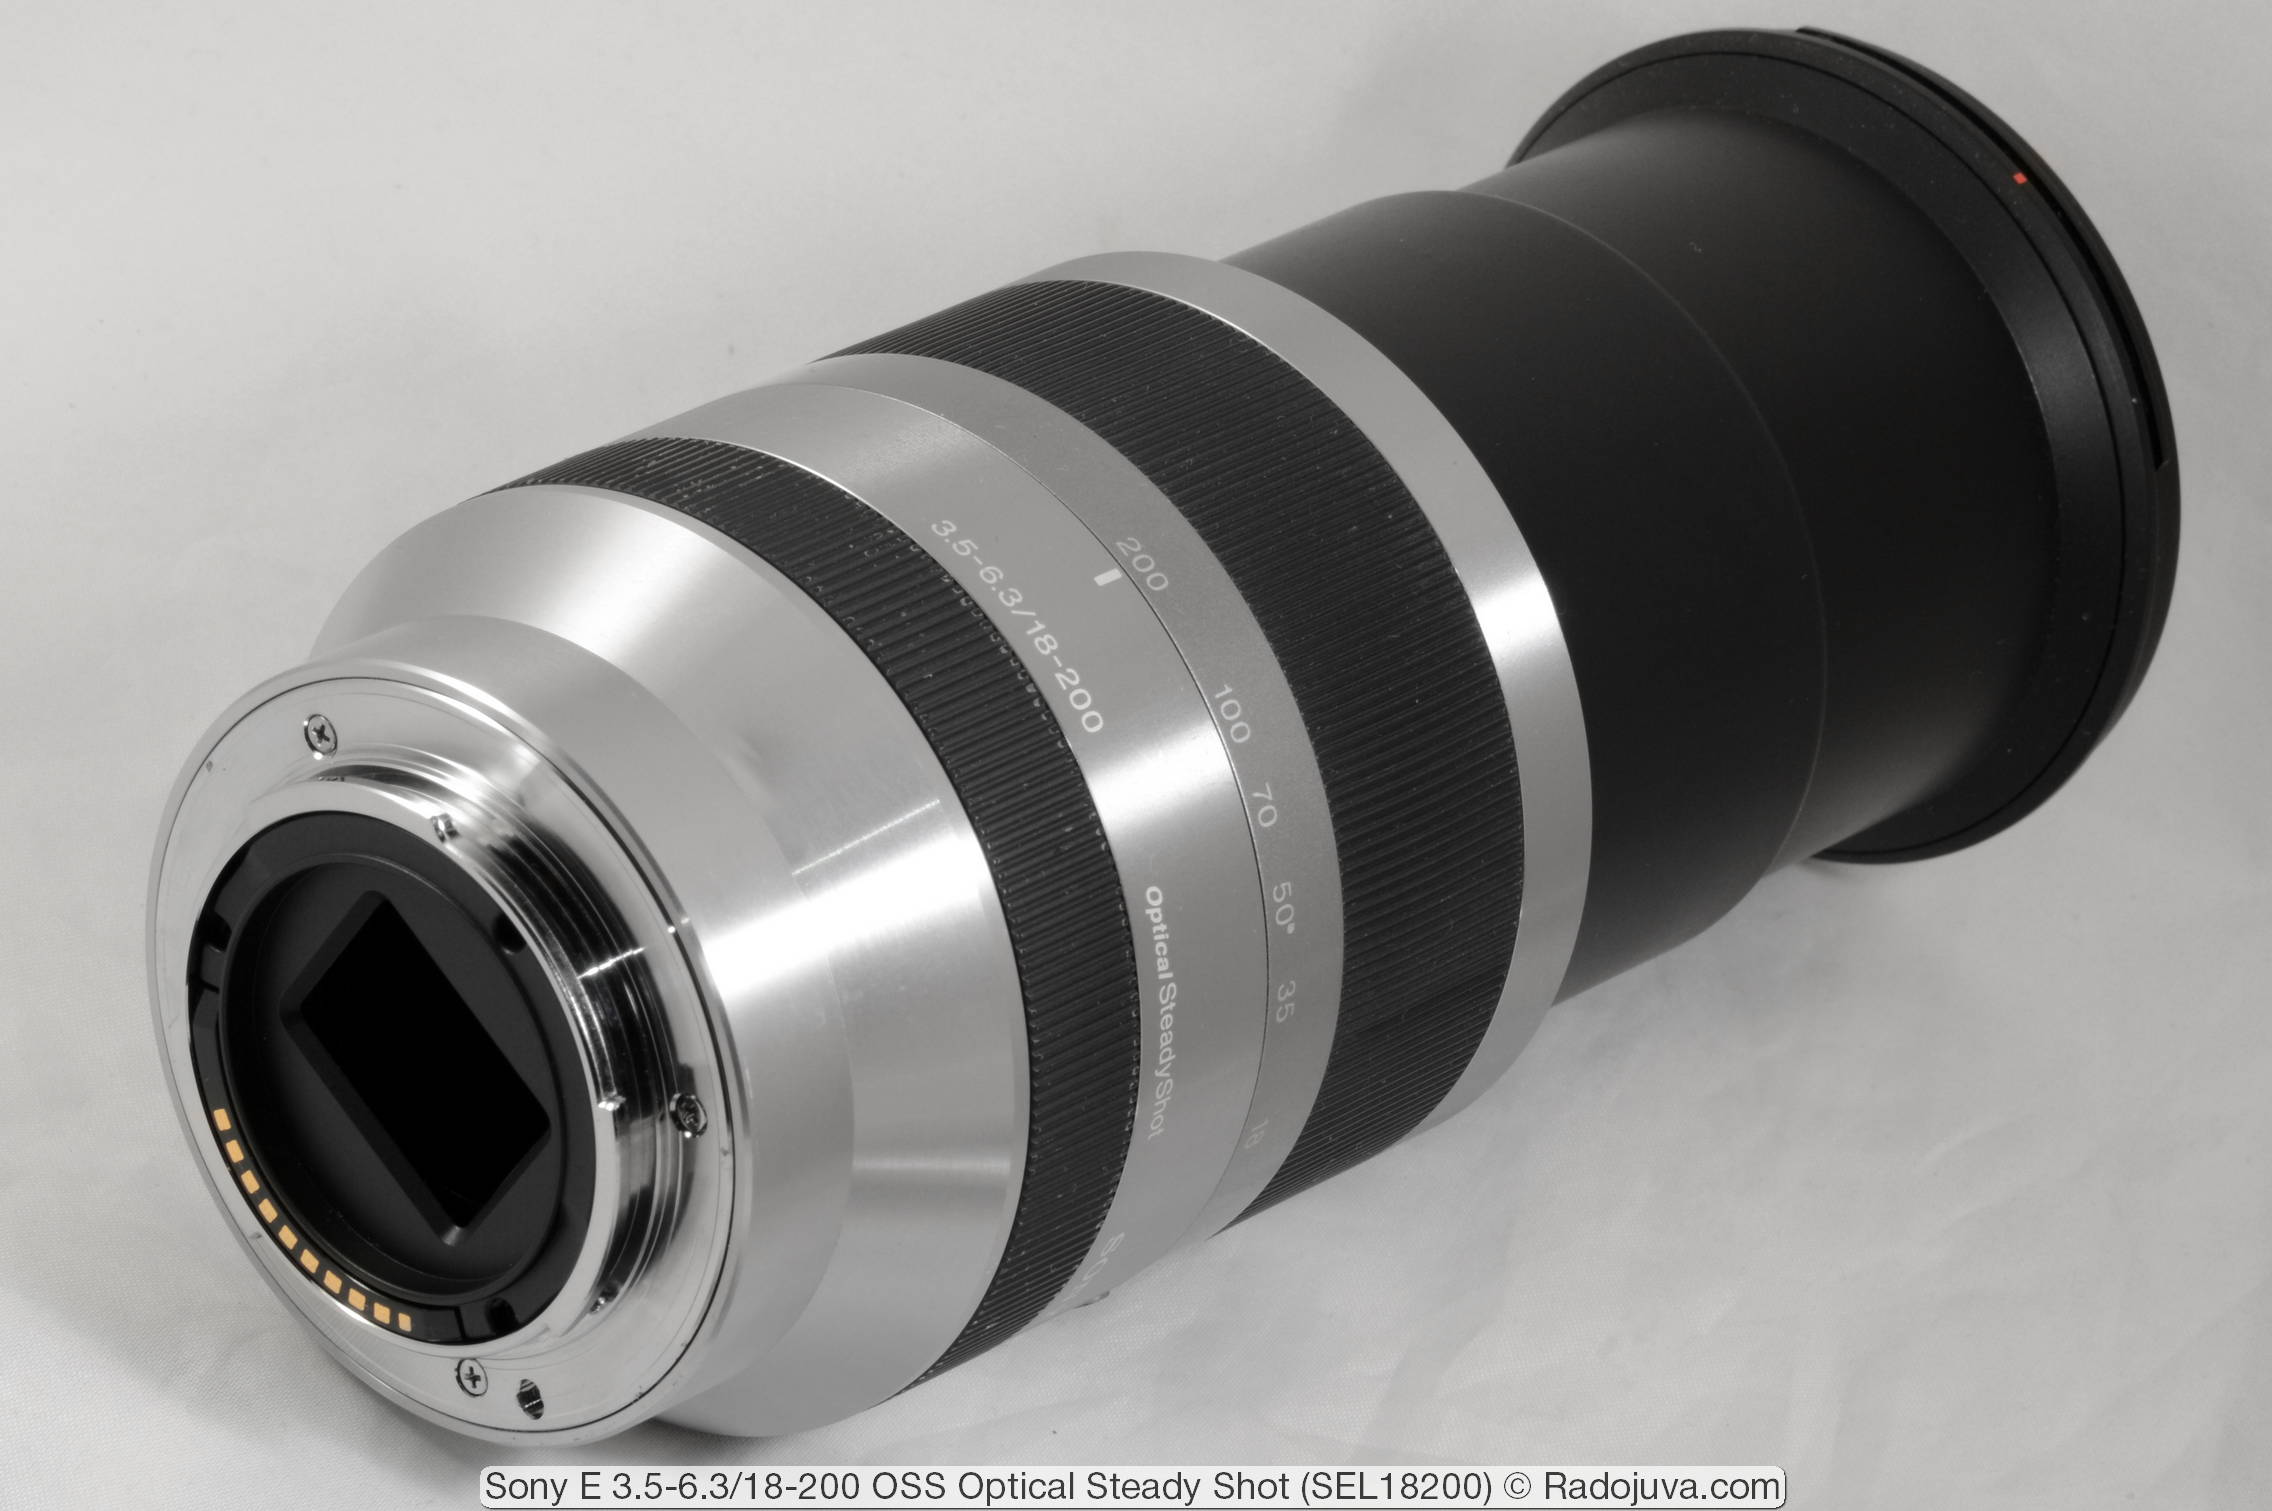 Review Sony E 3.5-6.3 / 18-200 OSS (Optical Steady Shot, E-mount 